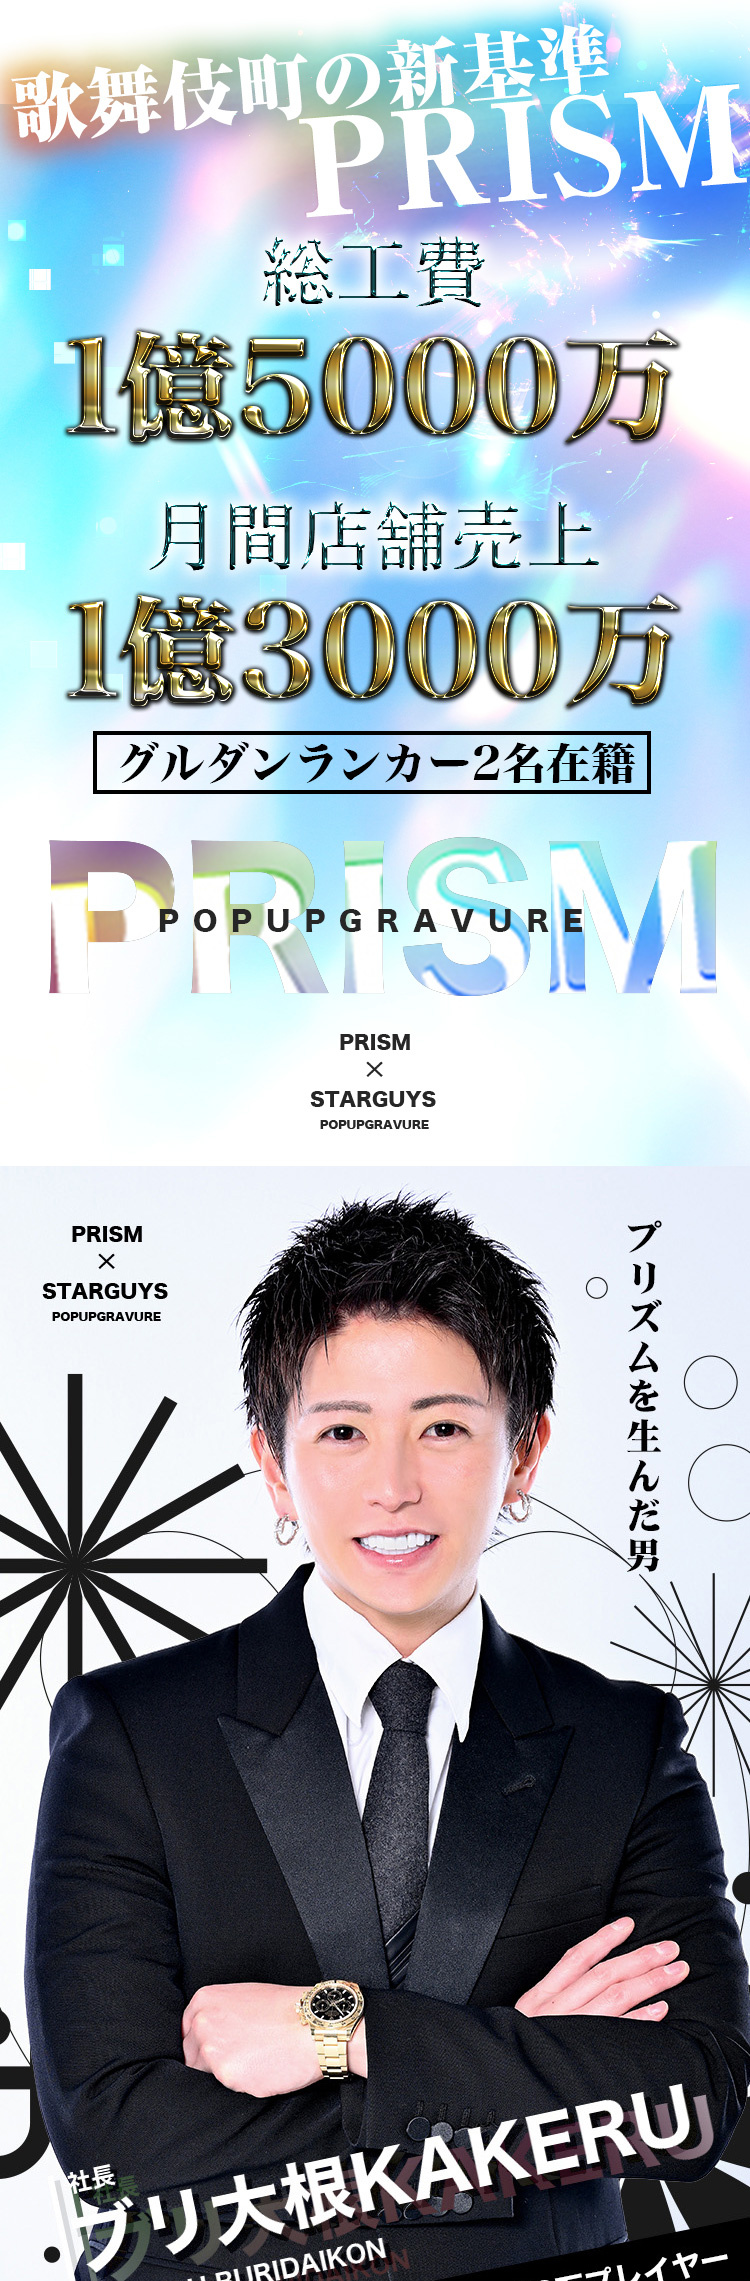 歌舞伎町 PRISM POPUPGRAVURE